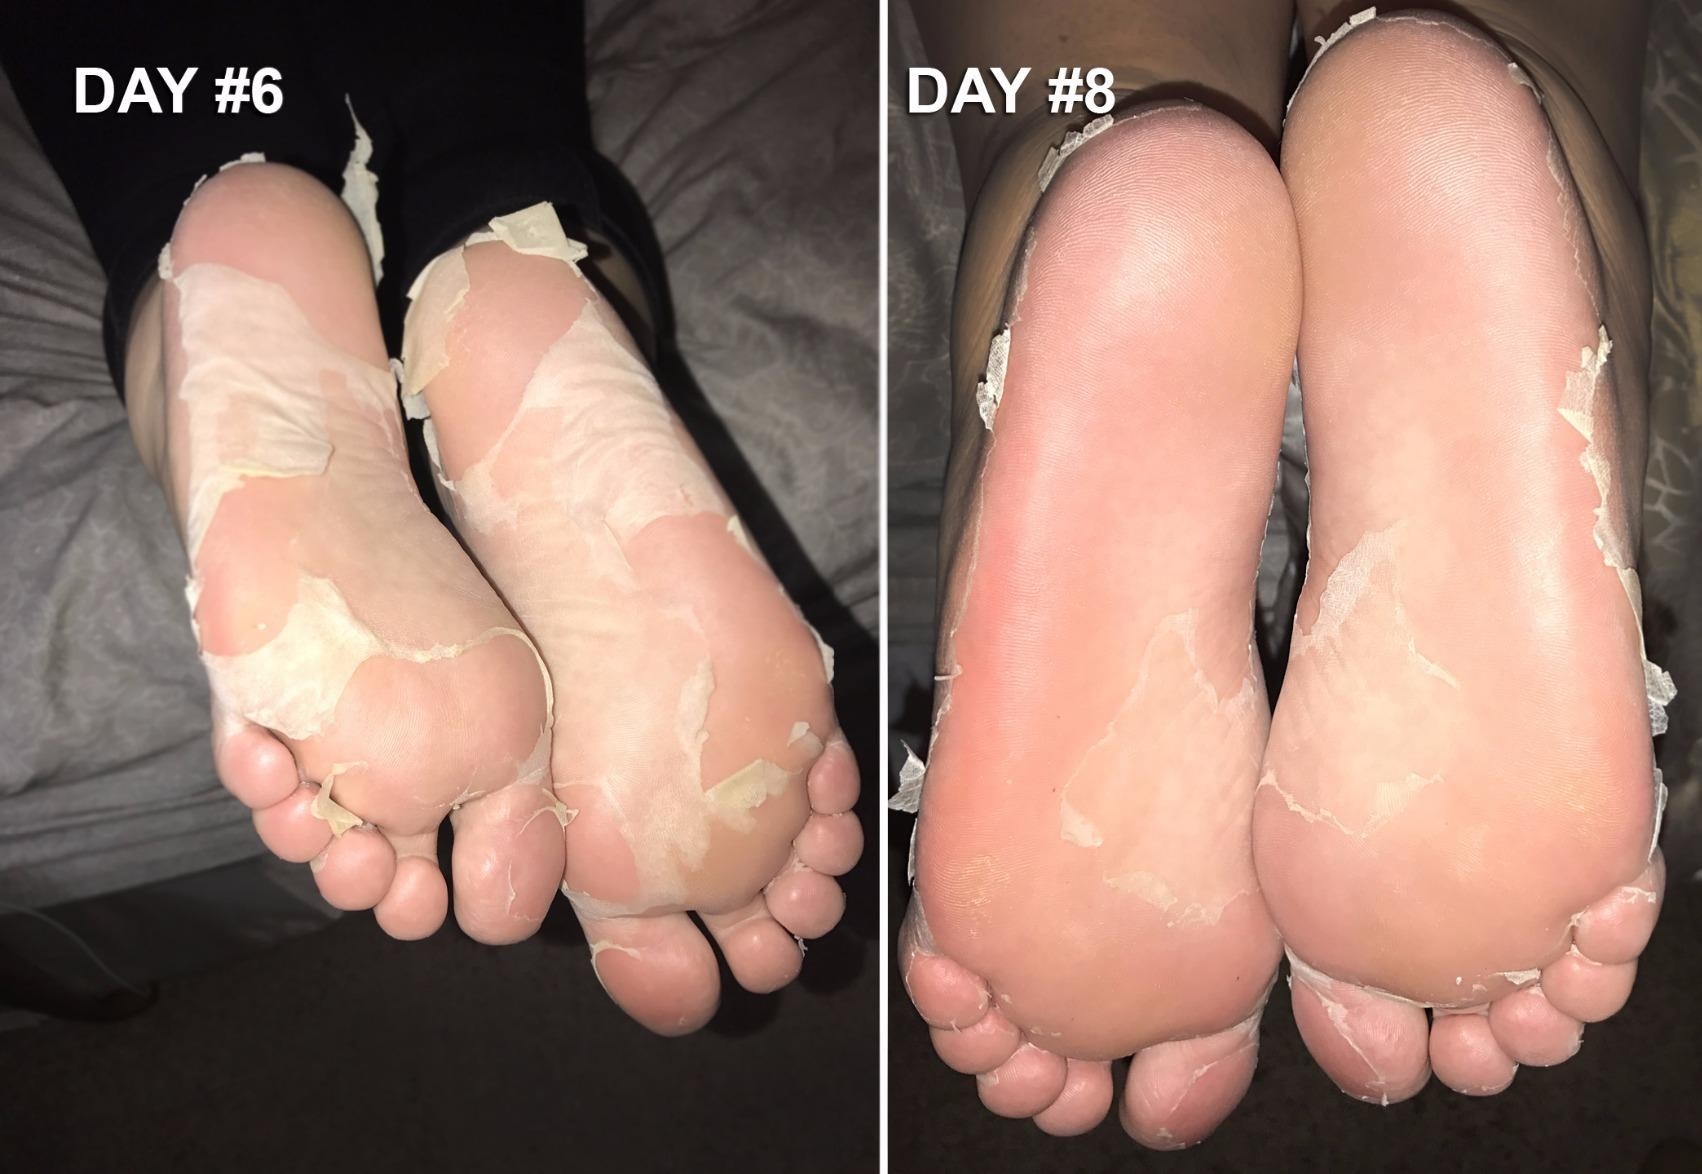 hard dry skin on bottom of foot